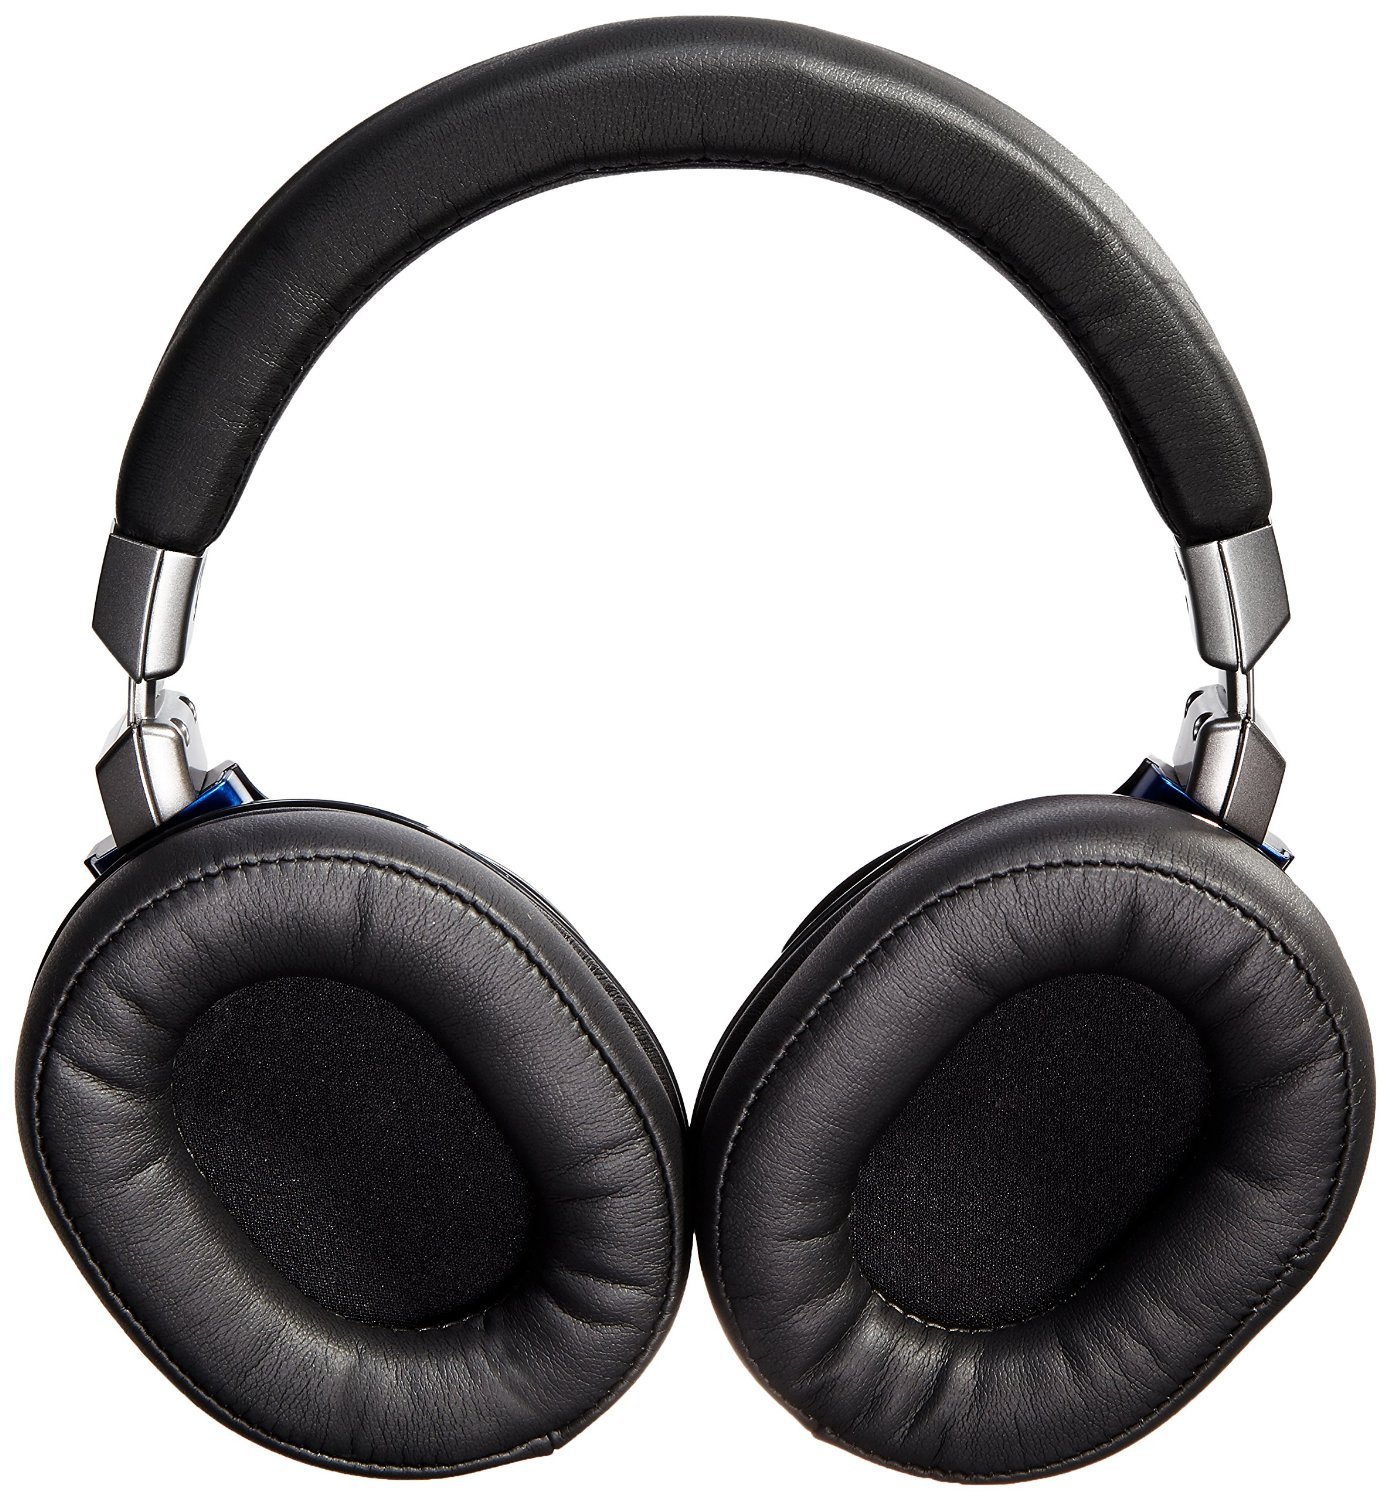 Audio-Technica ATH-MSR7BK SonicPro Over-Ear High-Resolution Audio Headphones, Black